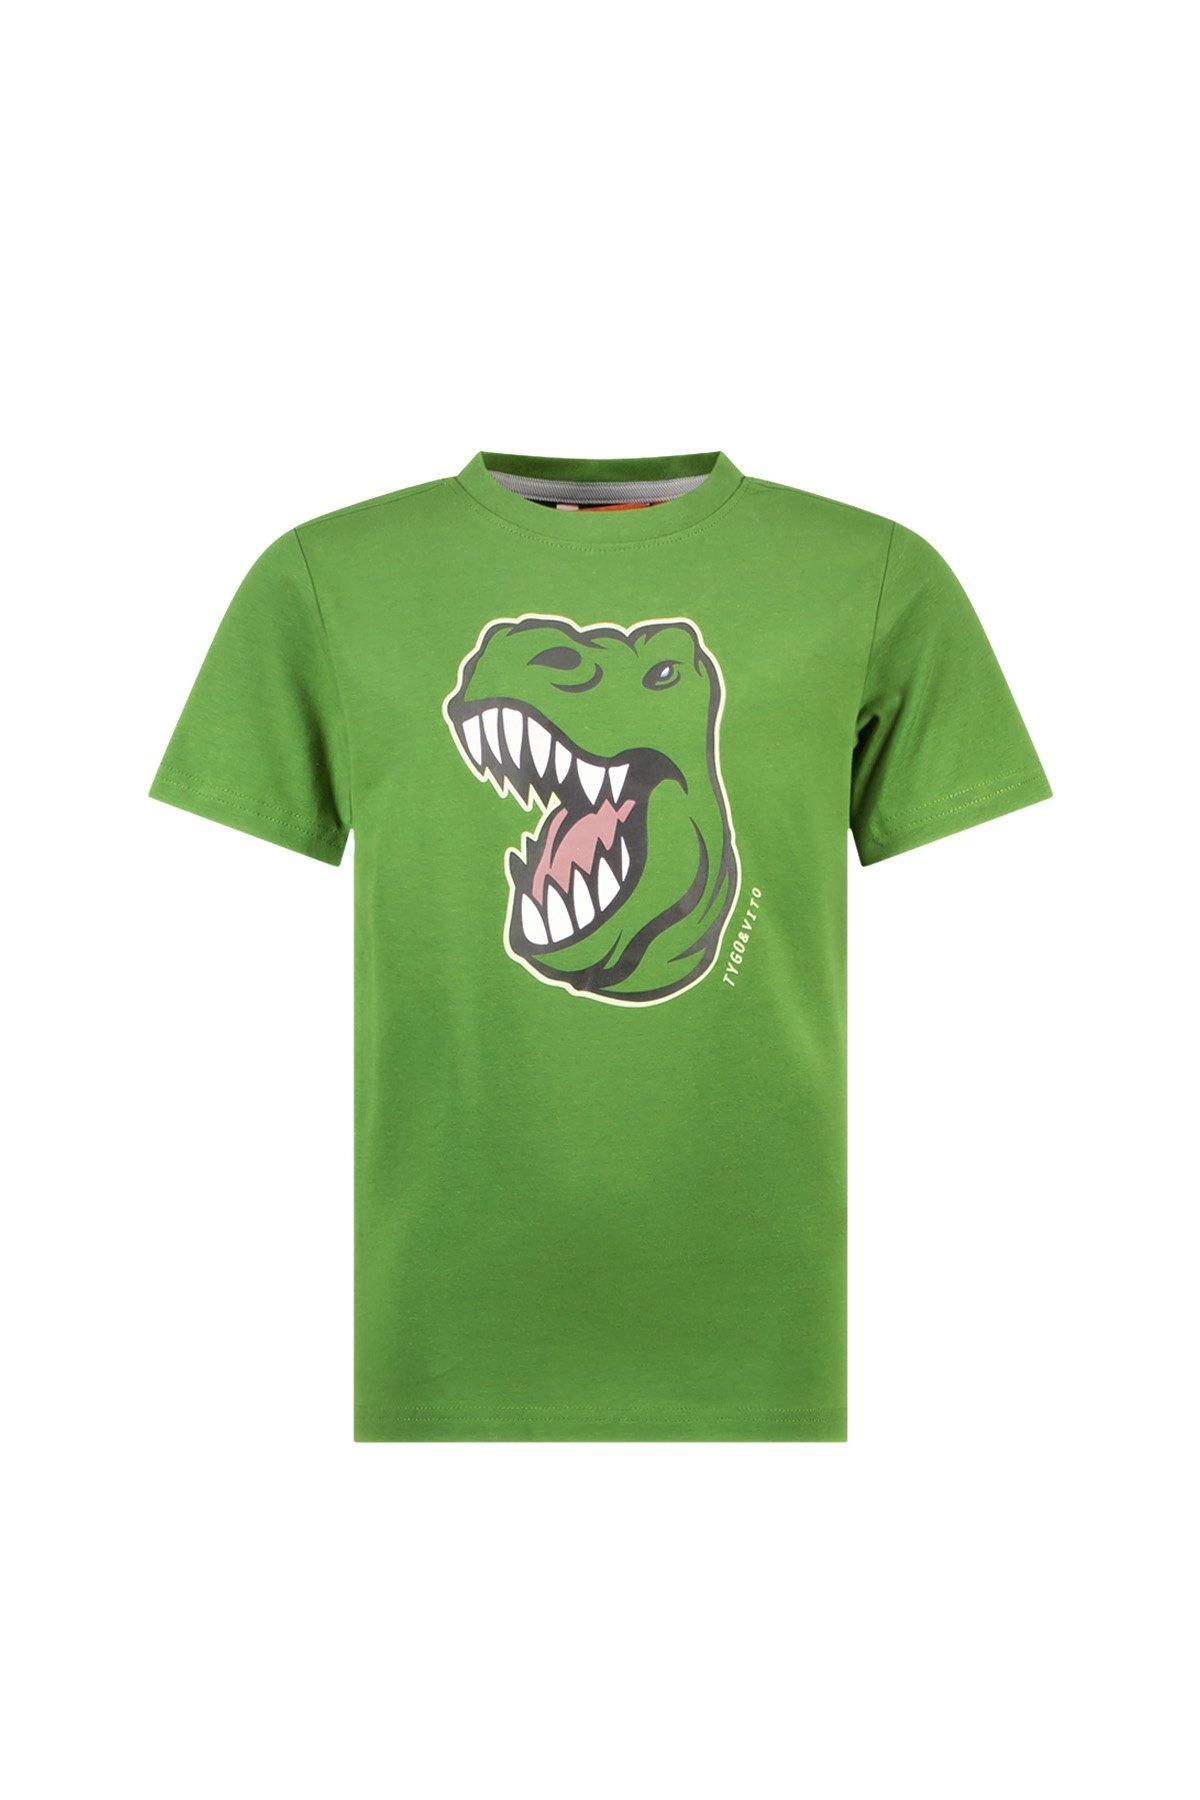 TYGO & vito X403-6423 Jongens T-shirt - Tropical Green - Maat 110-116